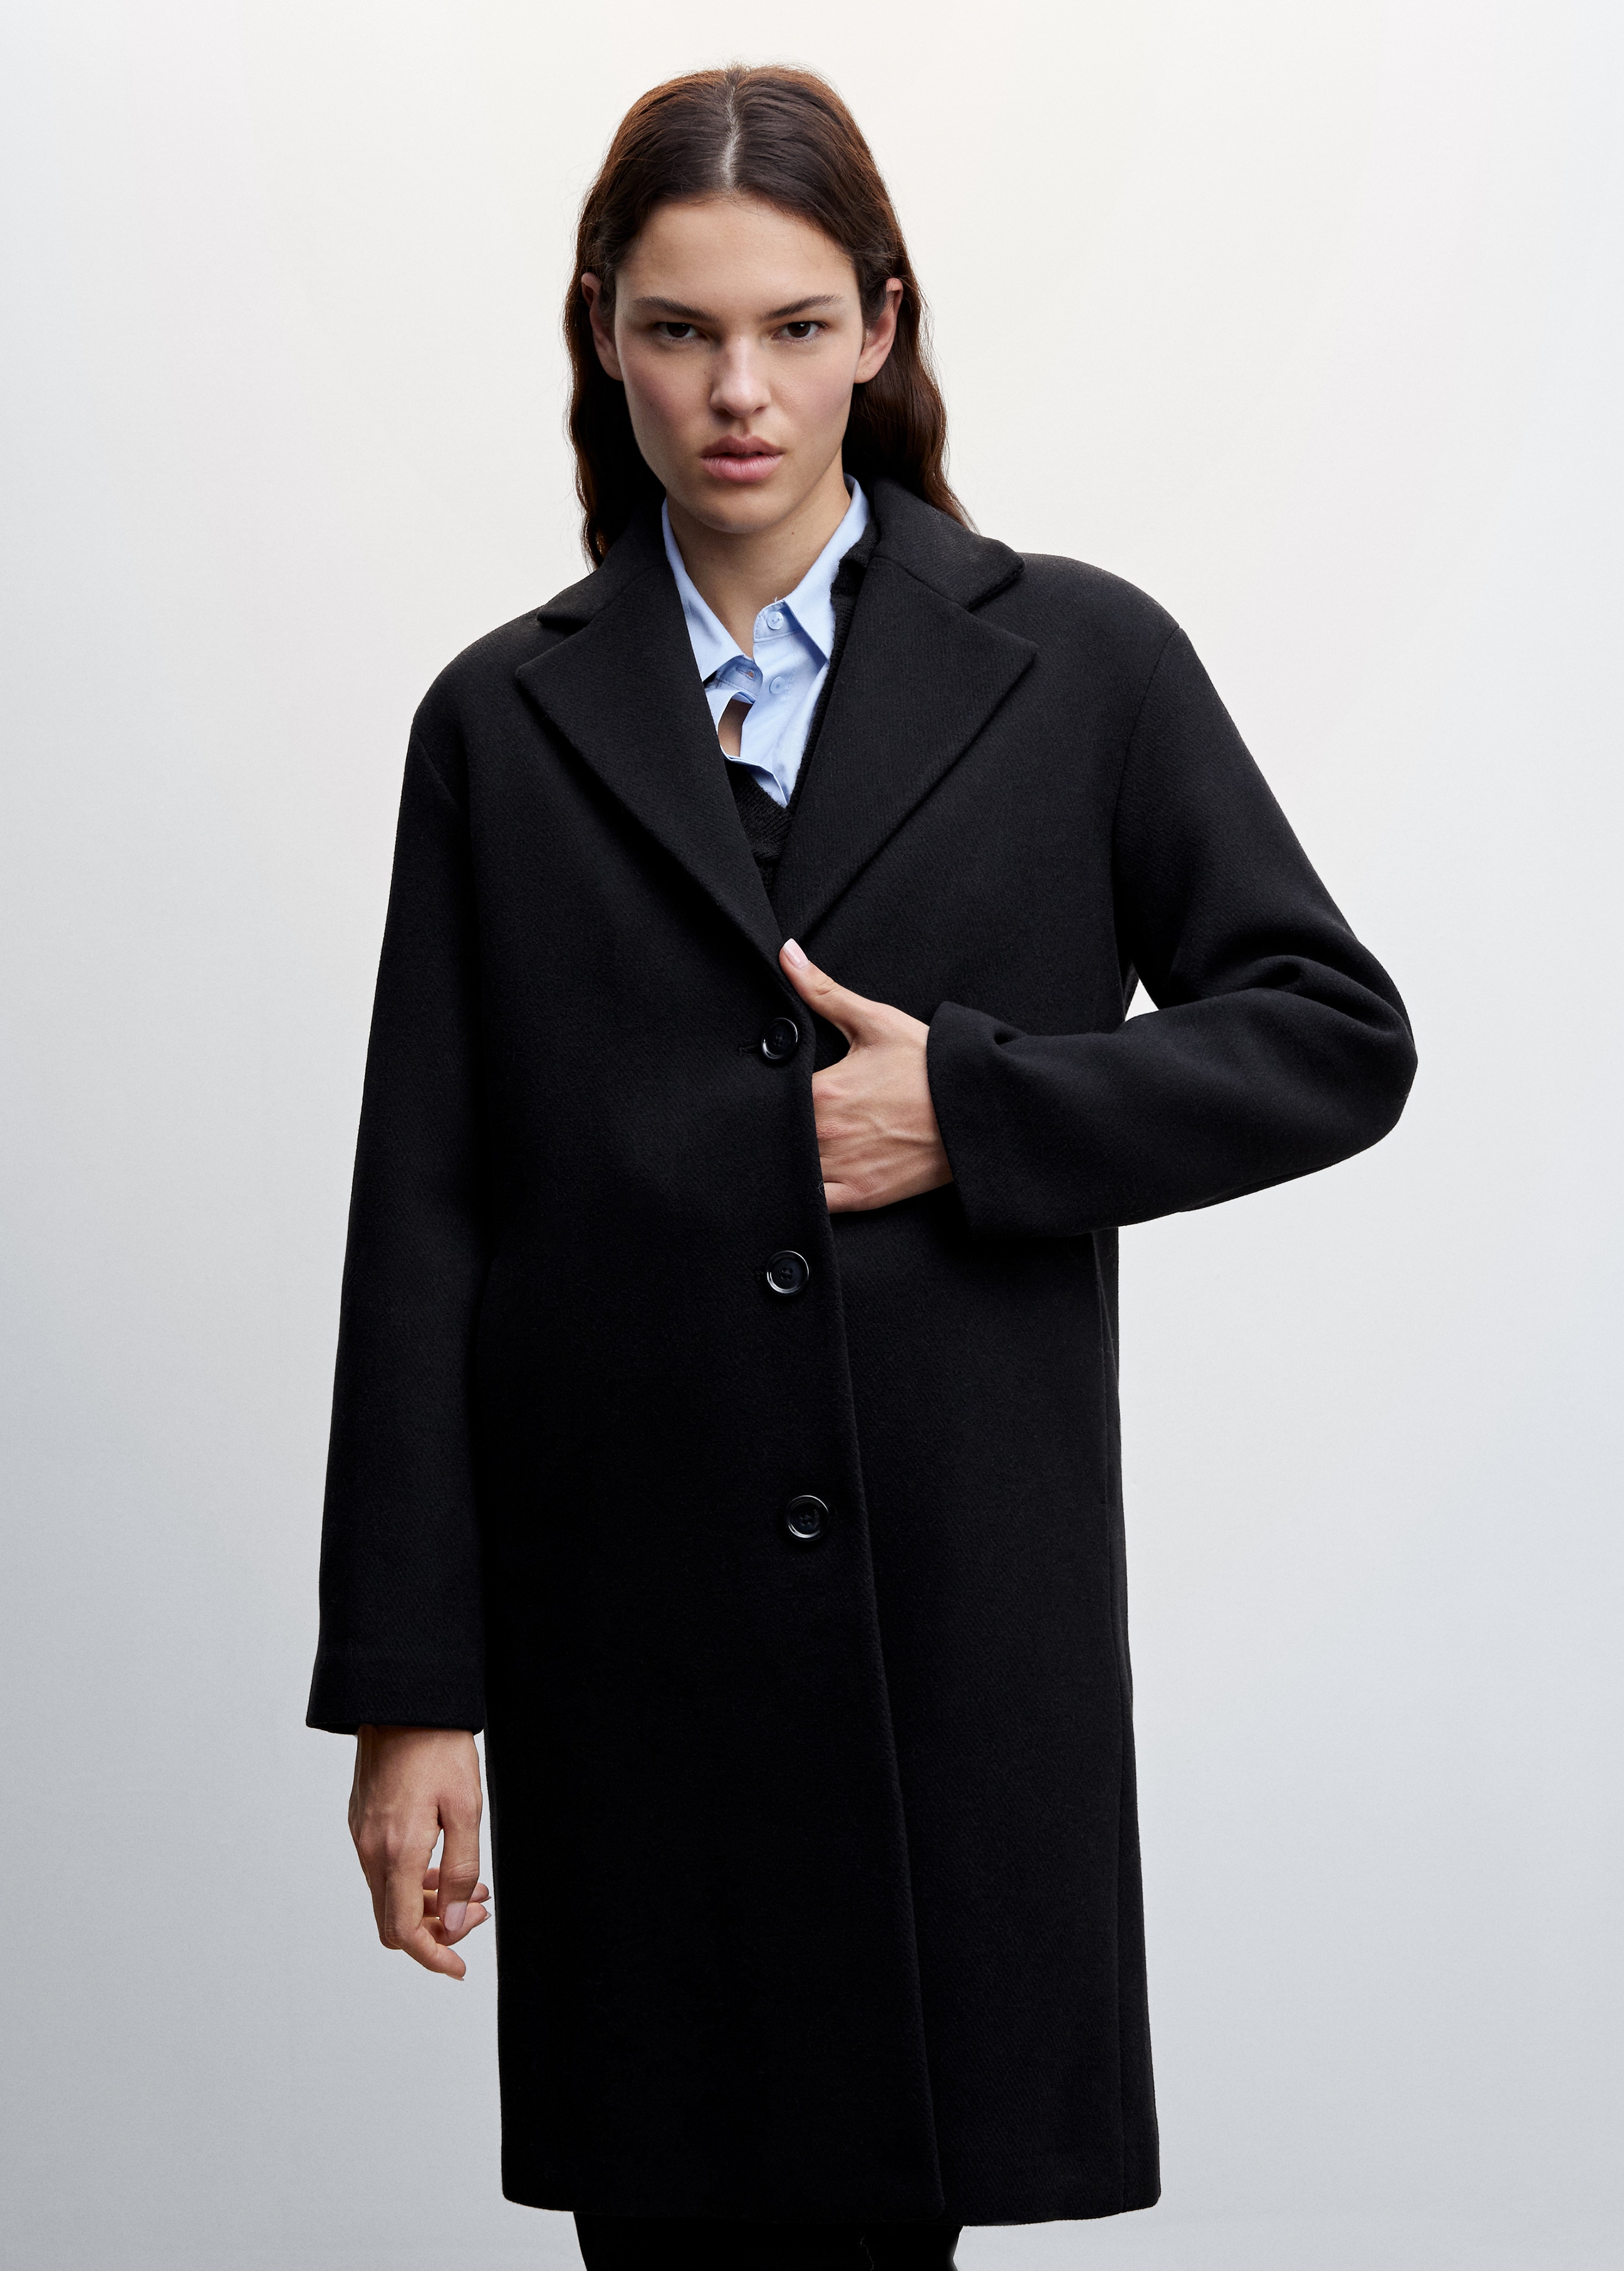 Buttoned wool coat - Medium plane